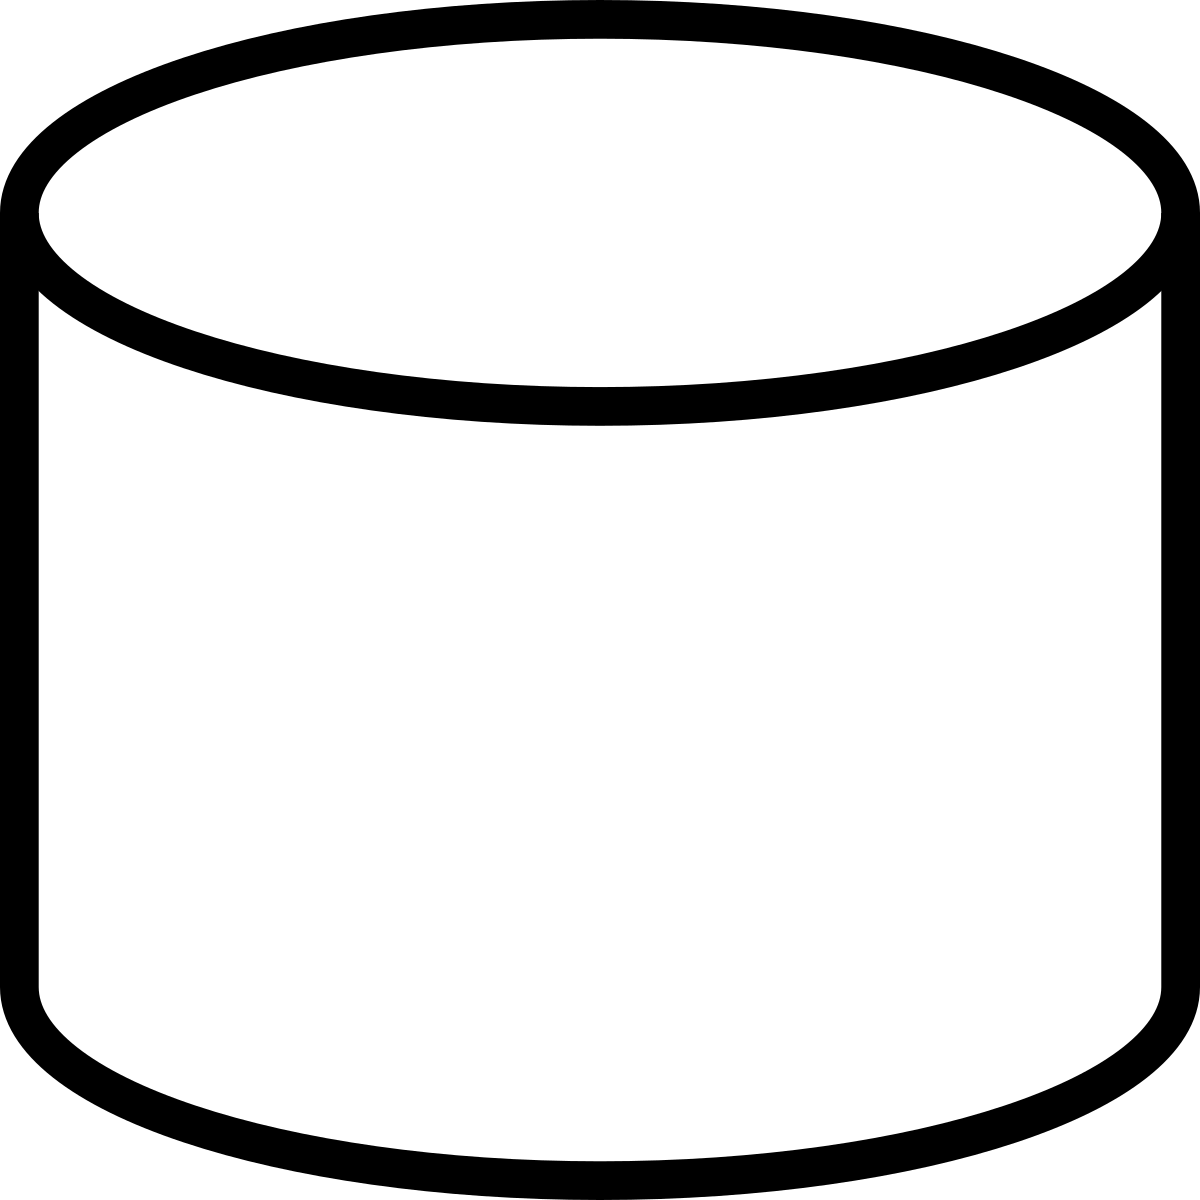 database symbol in flowchart